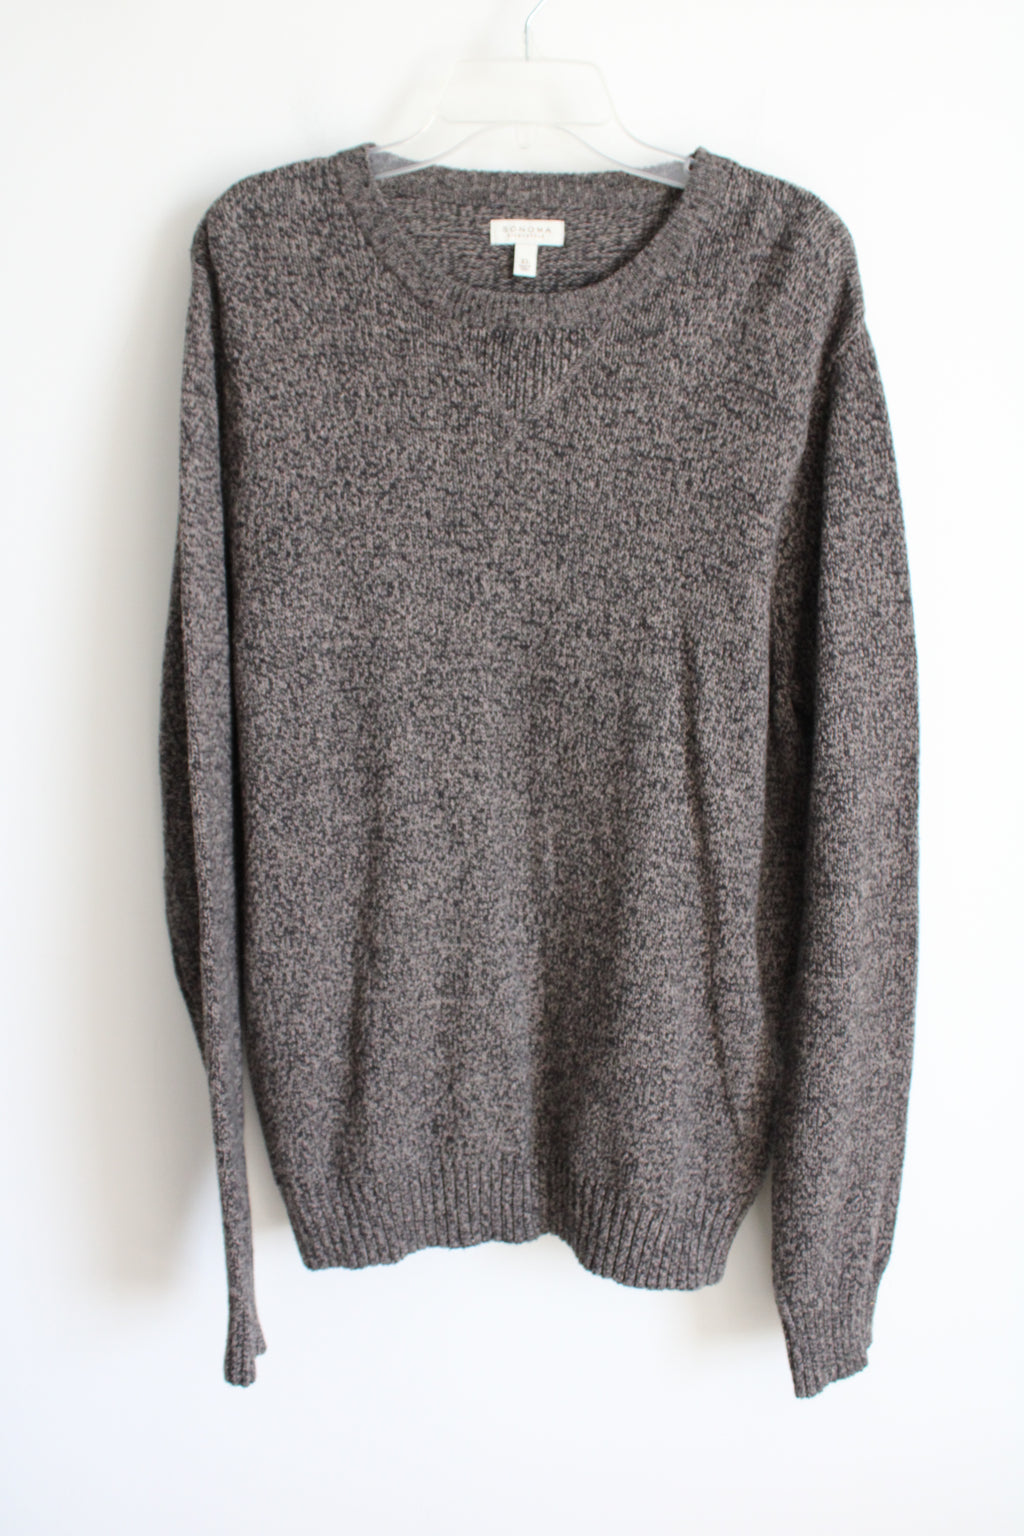 Sonoma Gray Knit Sweater | XL